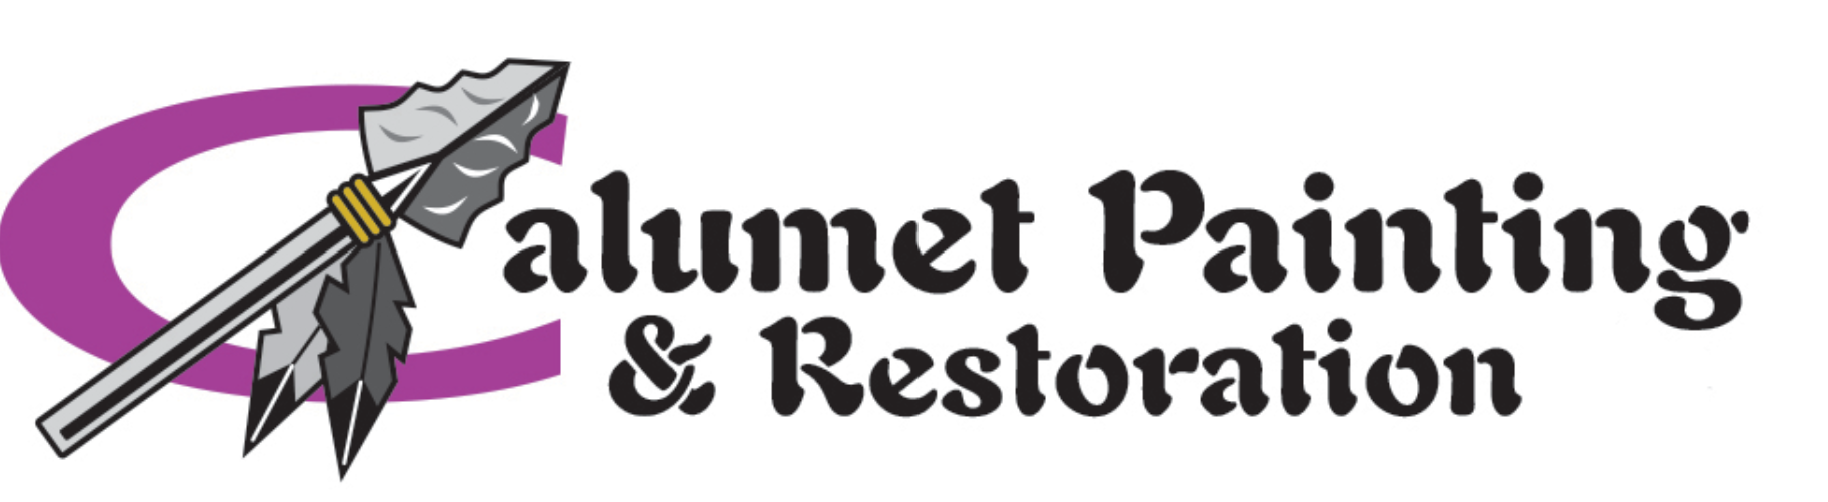 Calumet Painting & Restoration Logo